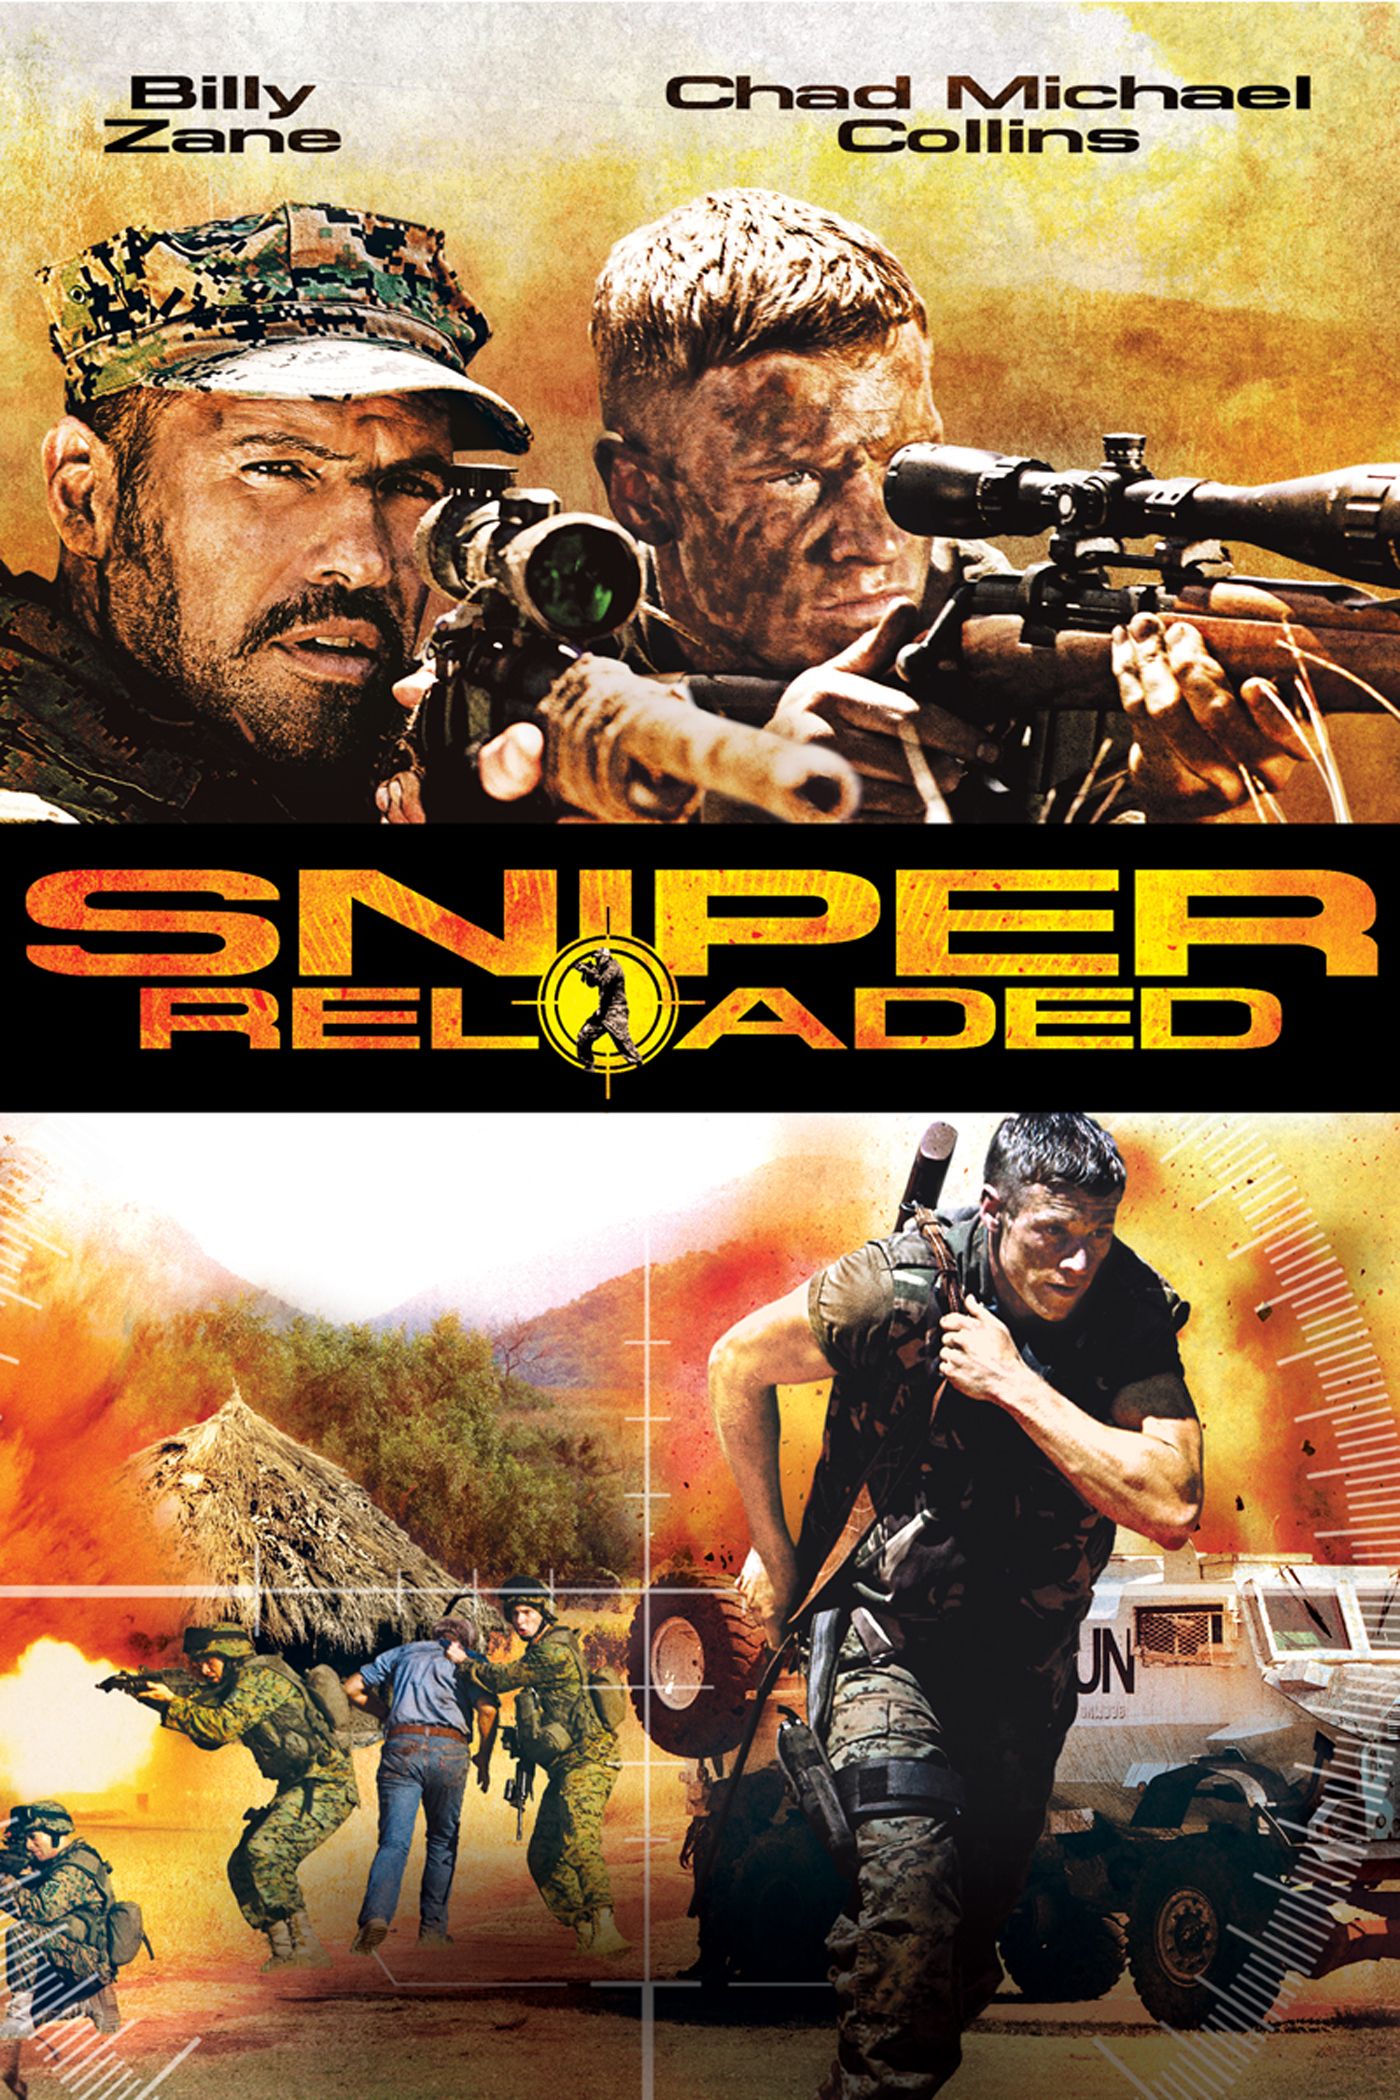 Sniper reloaded 2011